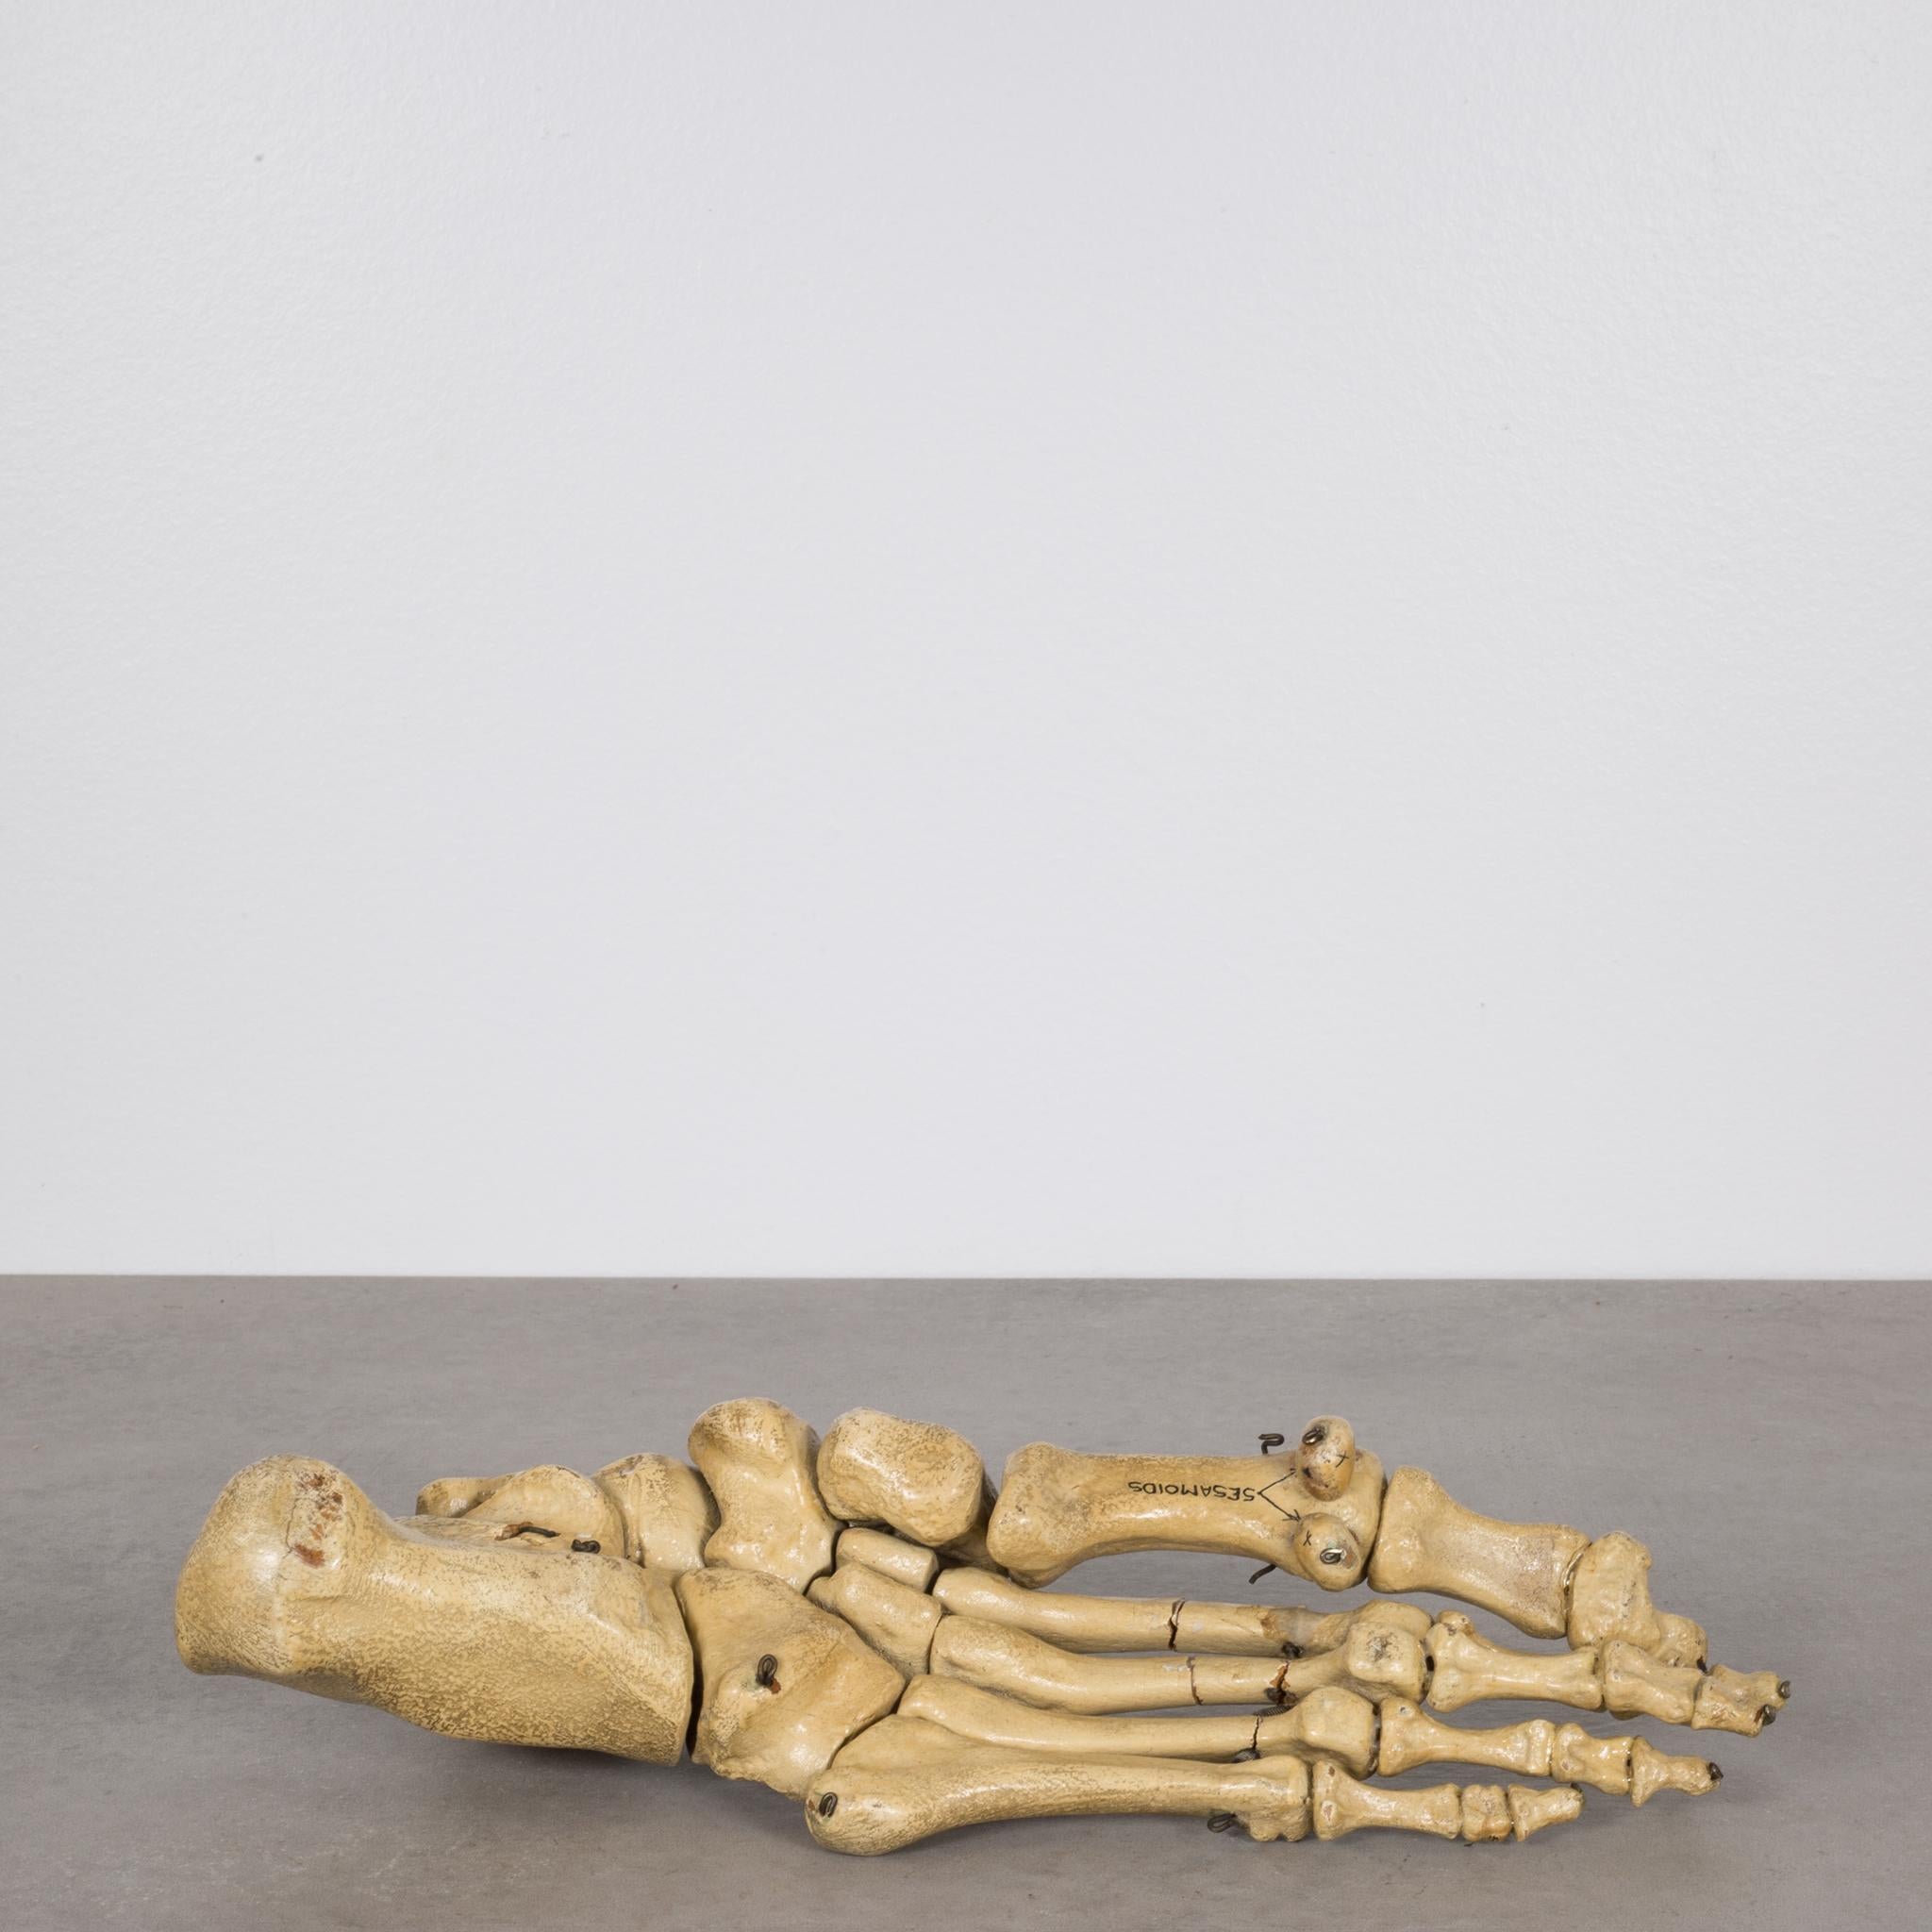 Antique Foot Skeletal Teaching Model, circa 1810 1